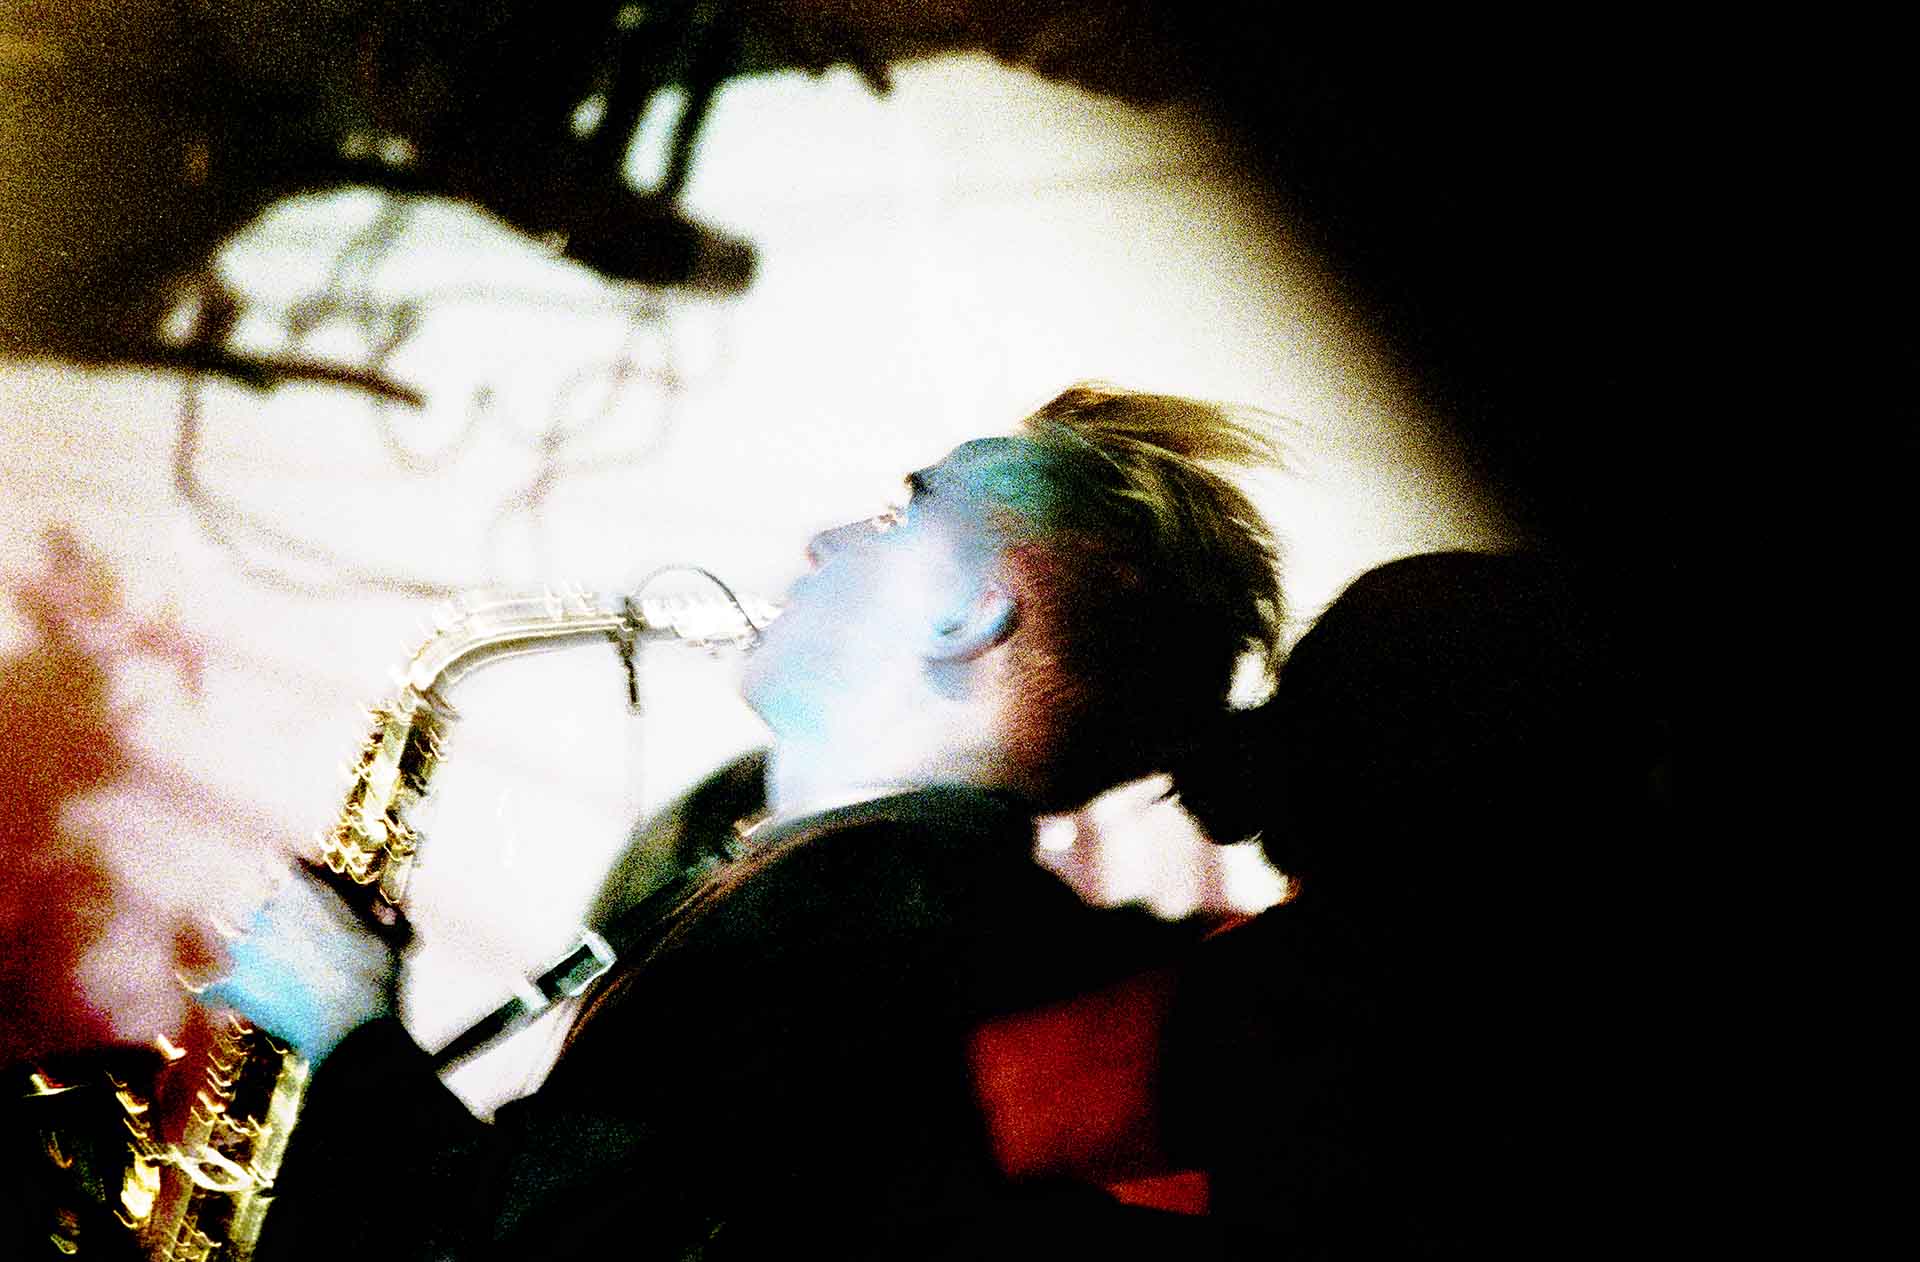 Live photos of experimental New Wave, Noise, Post-Punk, Industrial en Avantgarde bands inge-bekkers-photography-von-magnet-paard-van-troje-1989-live-alternative-bands-5423-fotografie